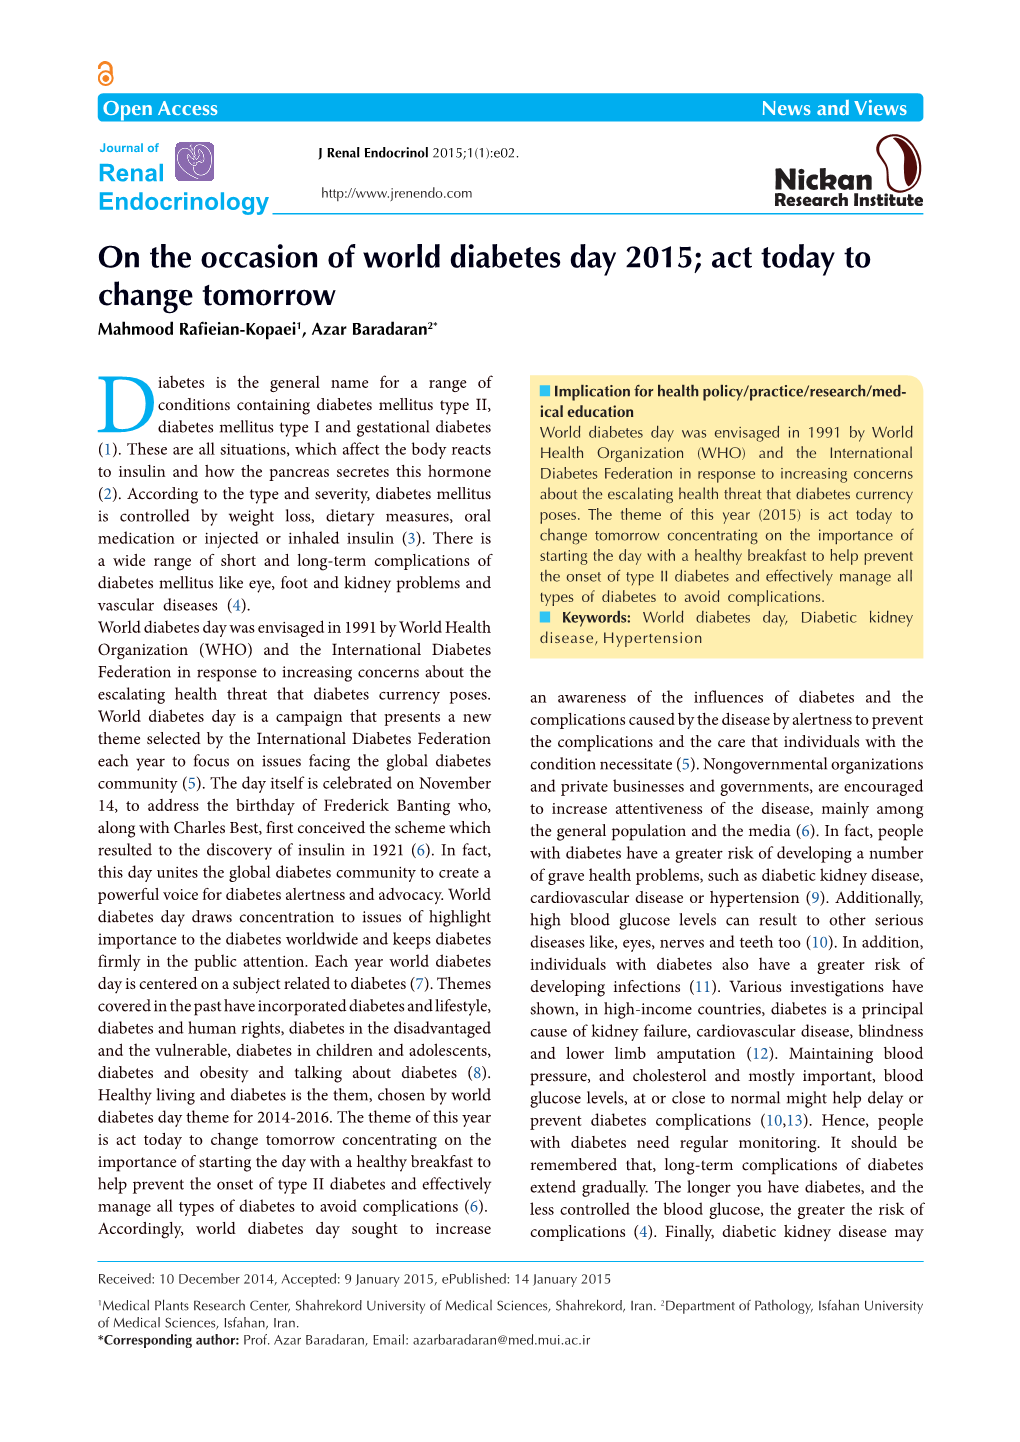 On the Occasion of World Diabetes Day 2015; Act Today to Change Tomorrow Mahmood Rafieian-Kopaei1, Azar Baradaran2*